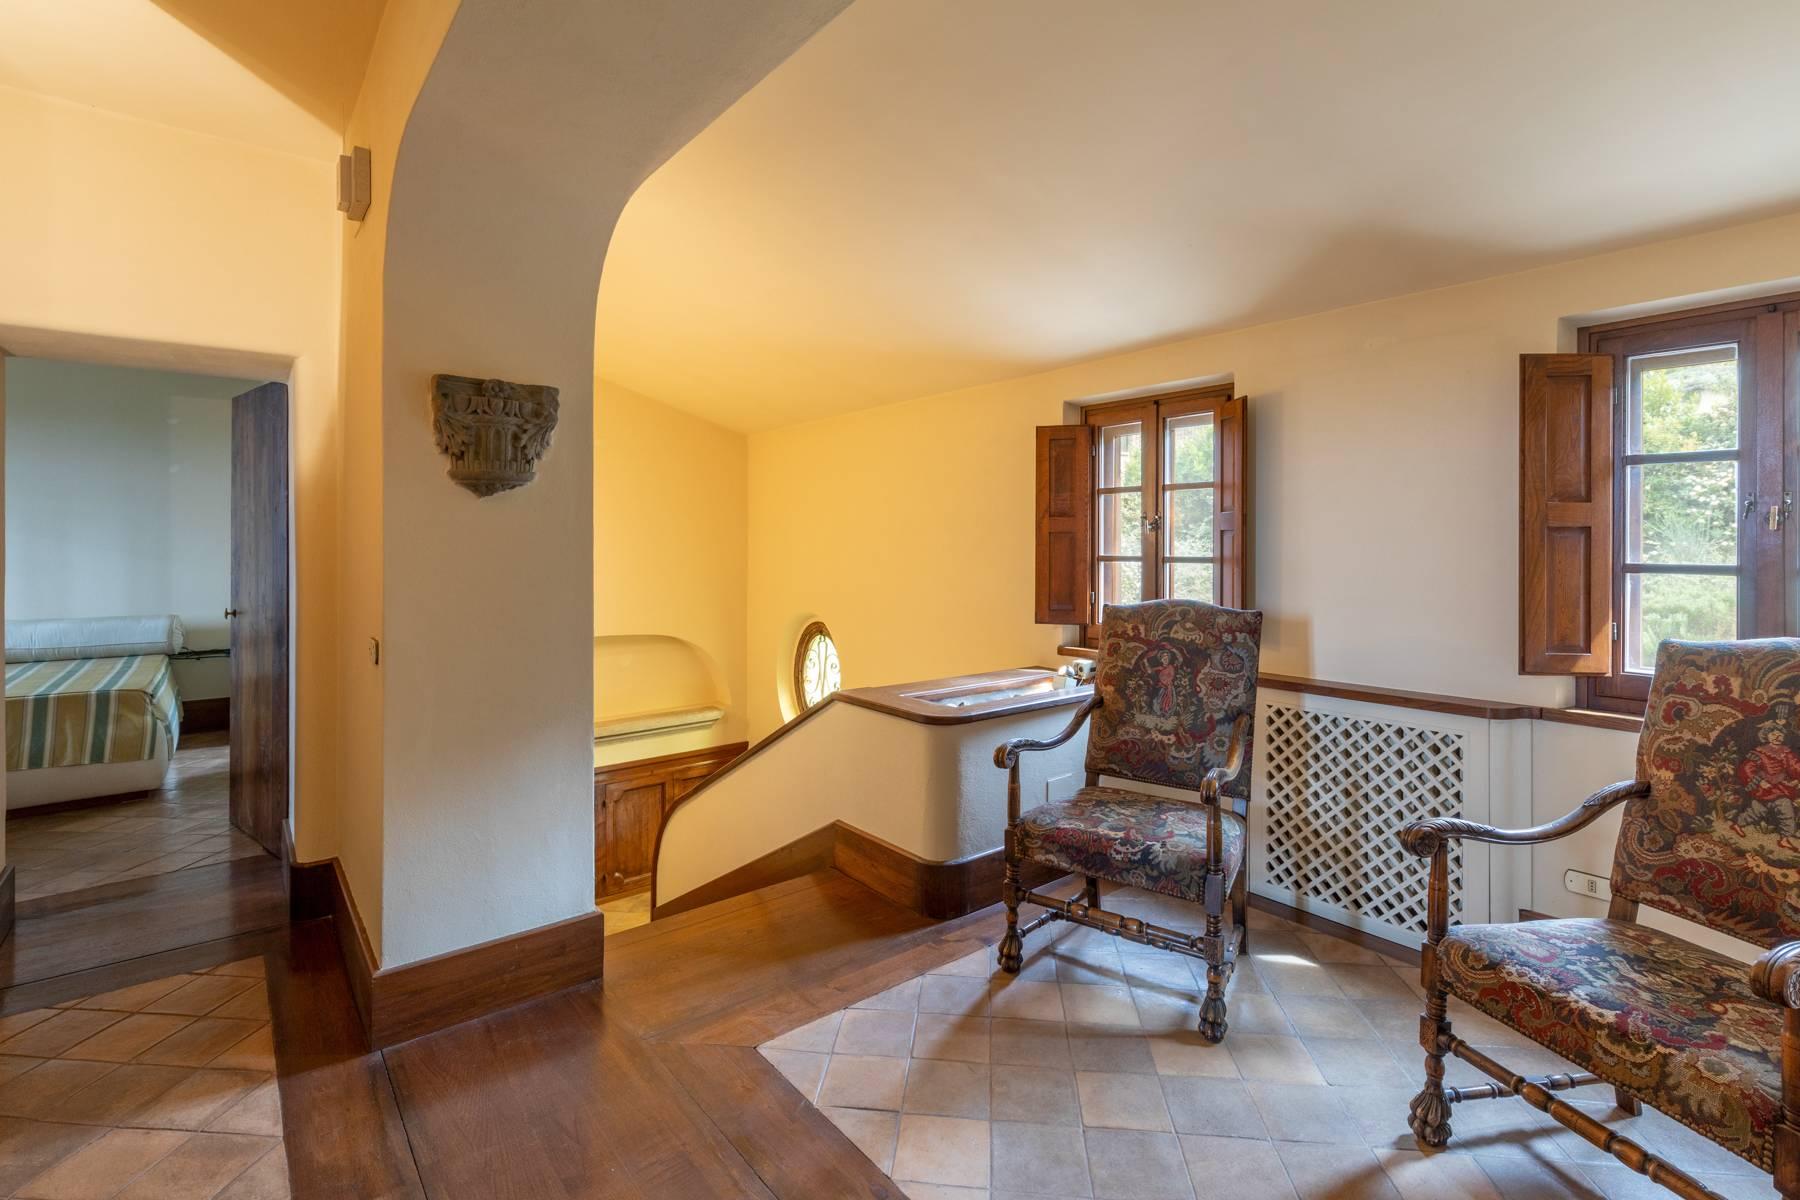 Historical villa dating back to the XVII century overlooking Arezzo - 30